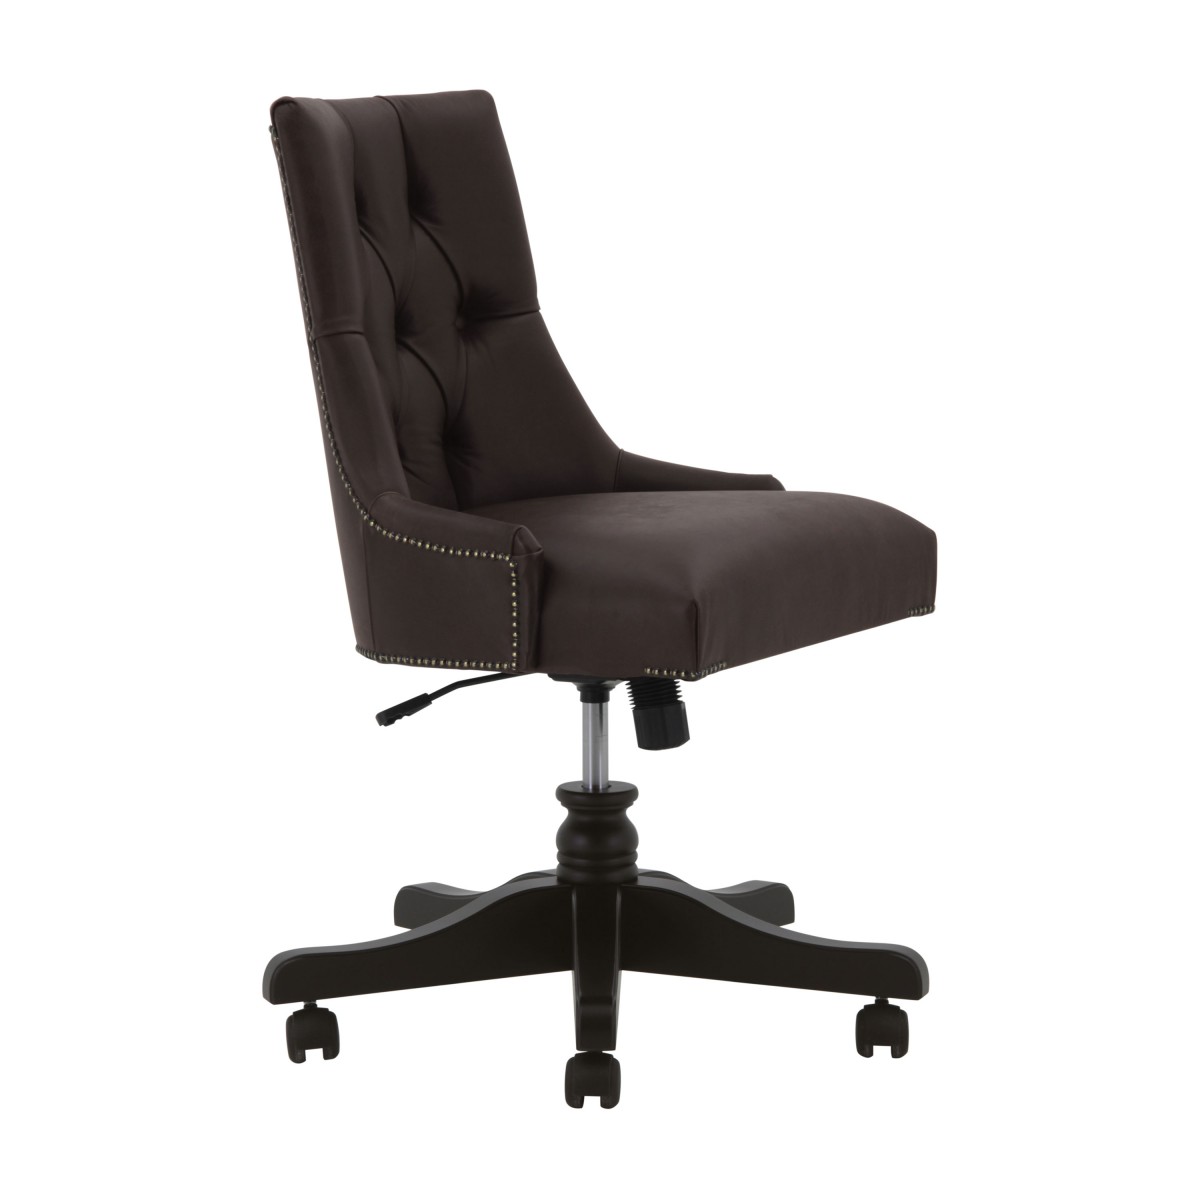 leather swivel chair edward 1 9335